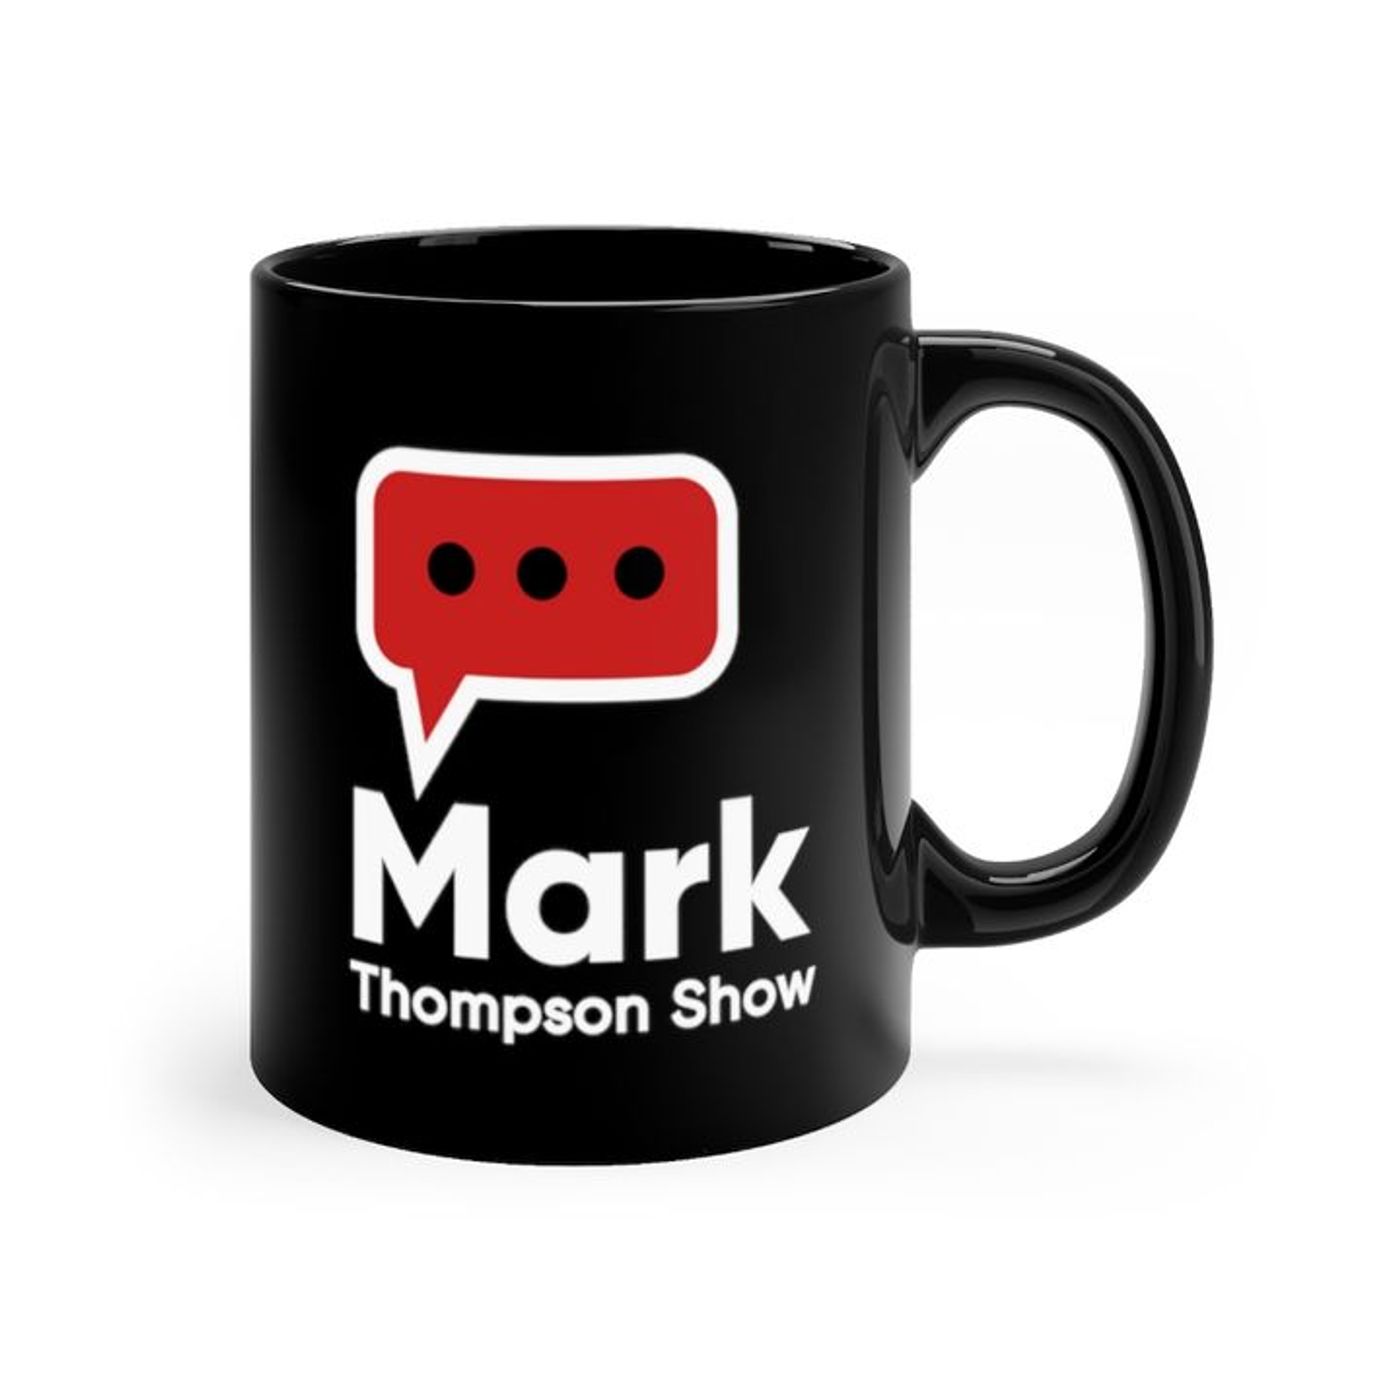 The Mark Thompson Show: TV and Digital Ads Flood Battle Ground States